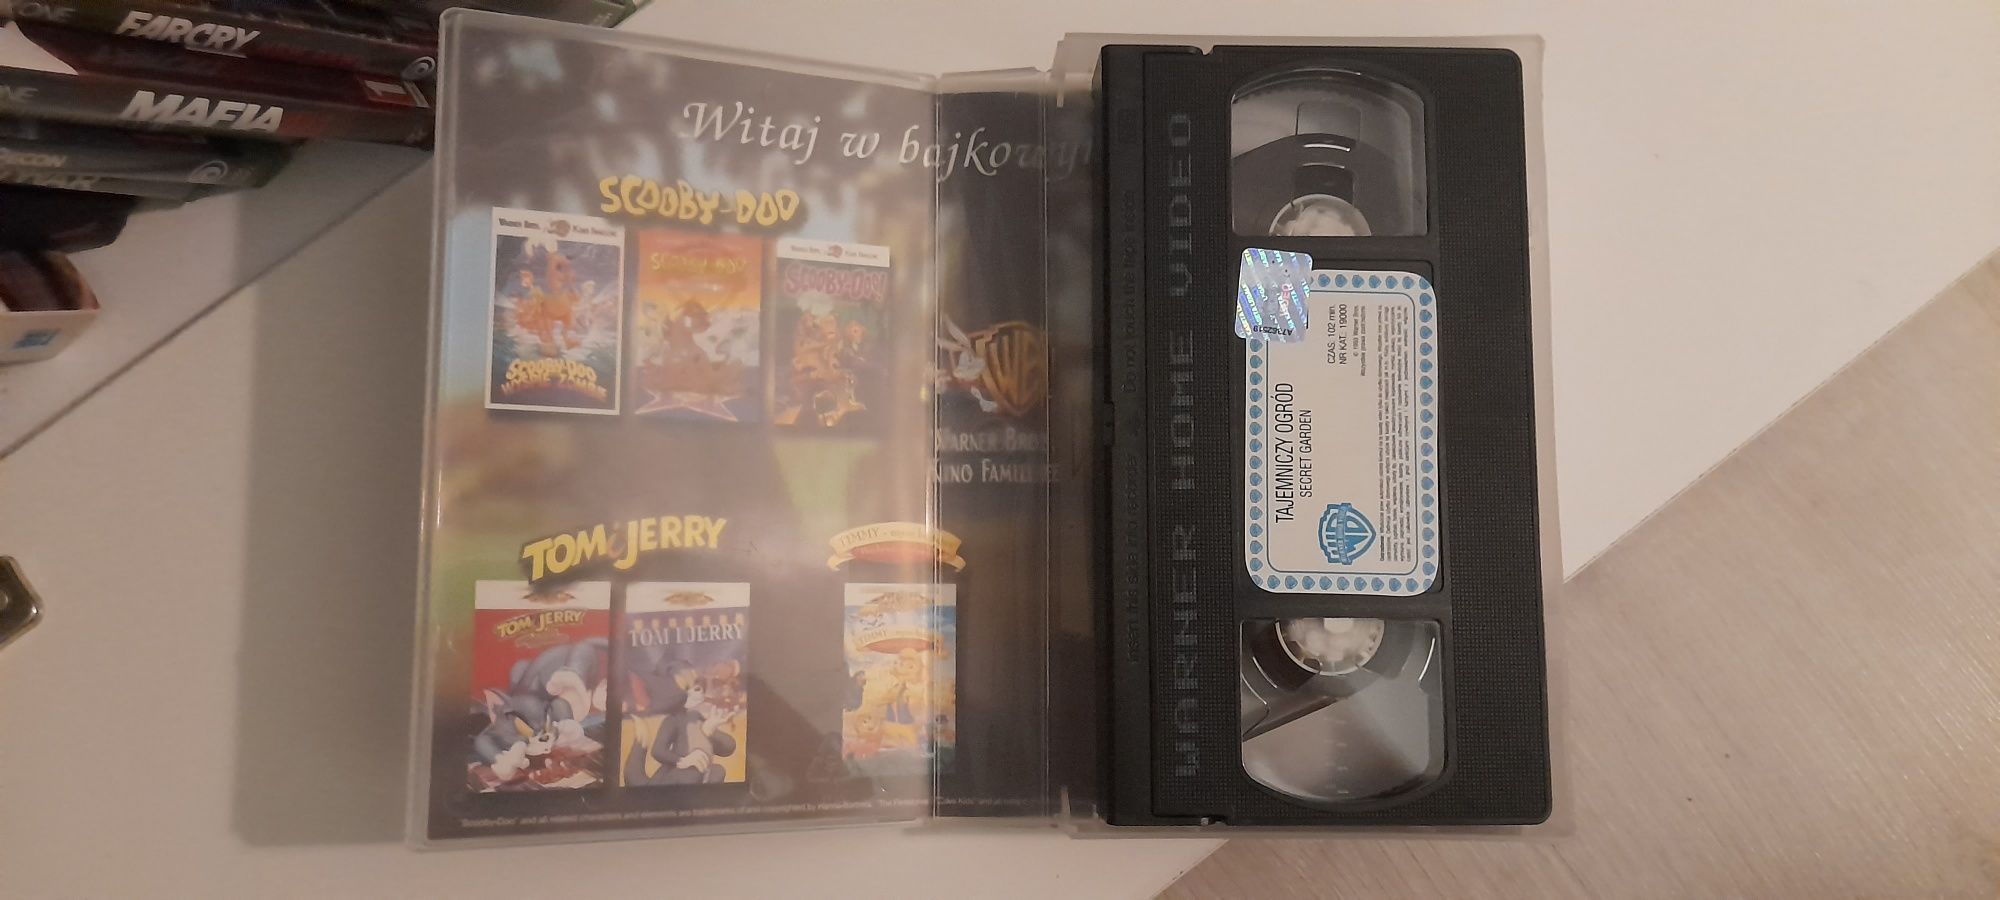 Kasety VHS Ćwiczenia Cindy Crawford